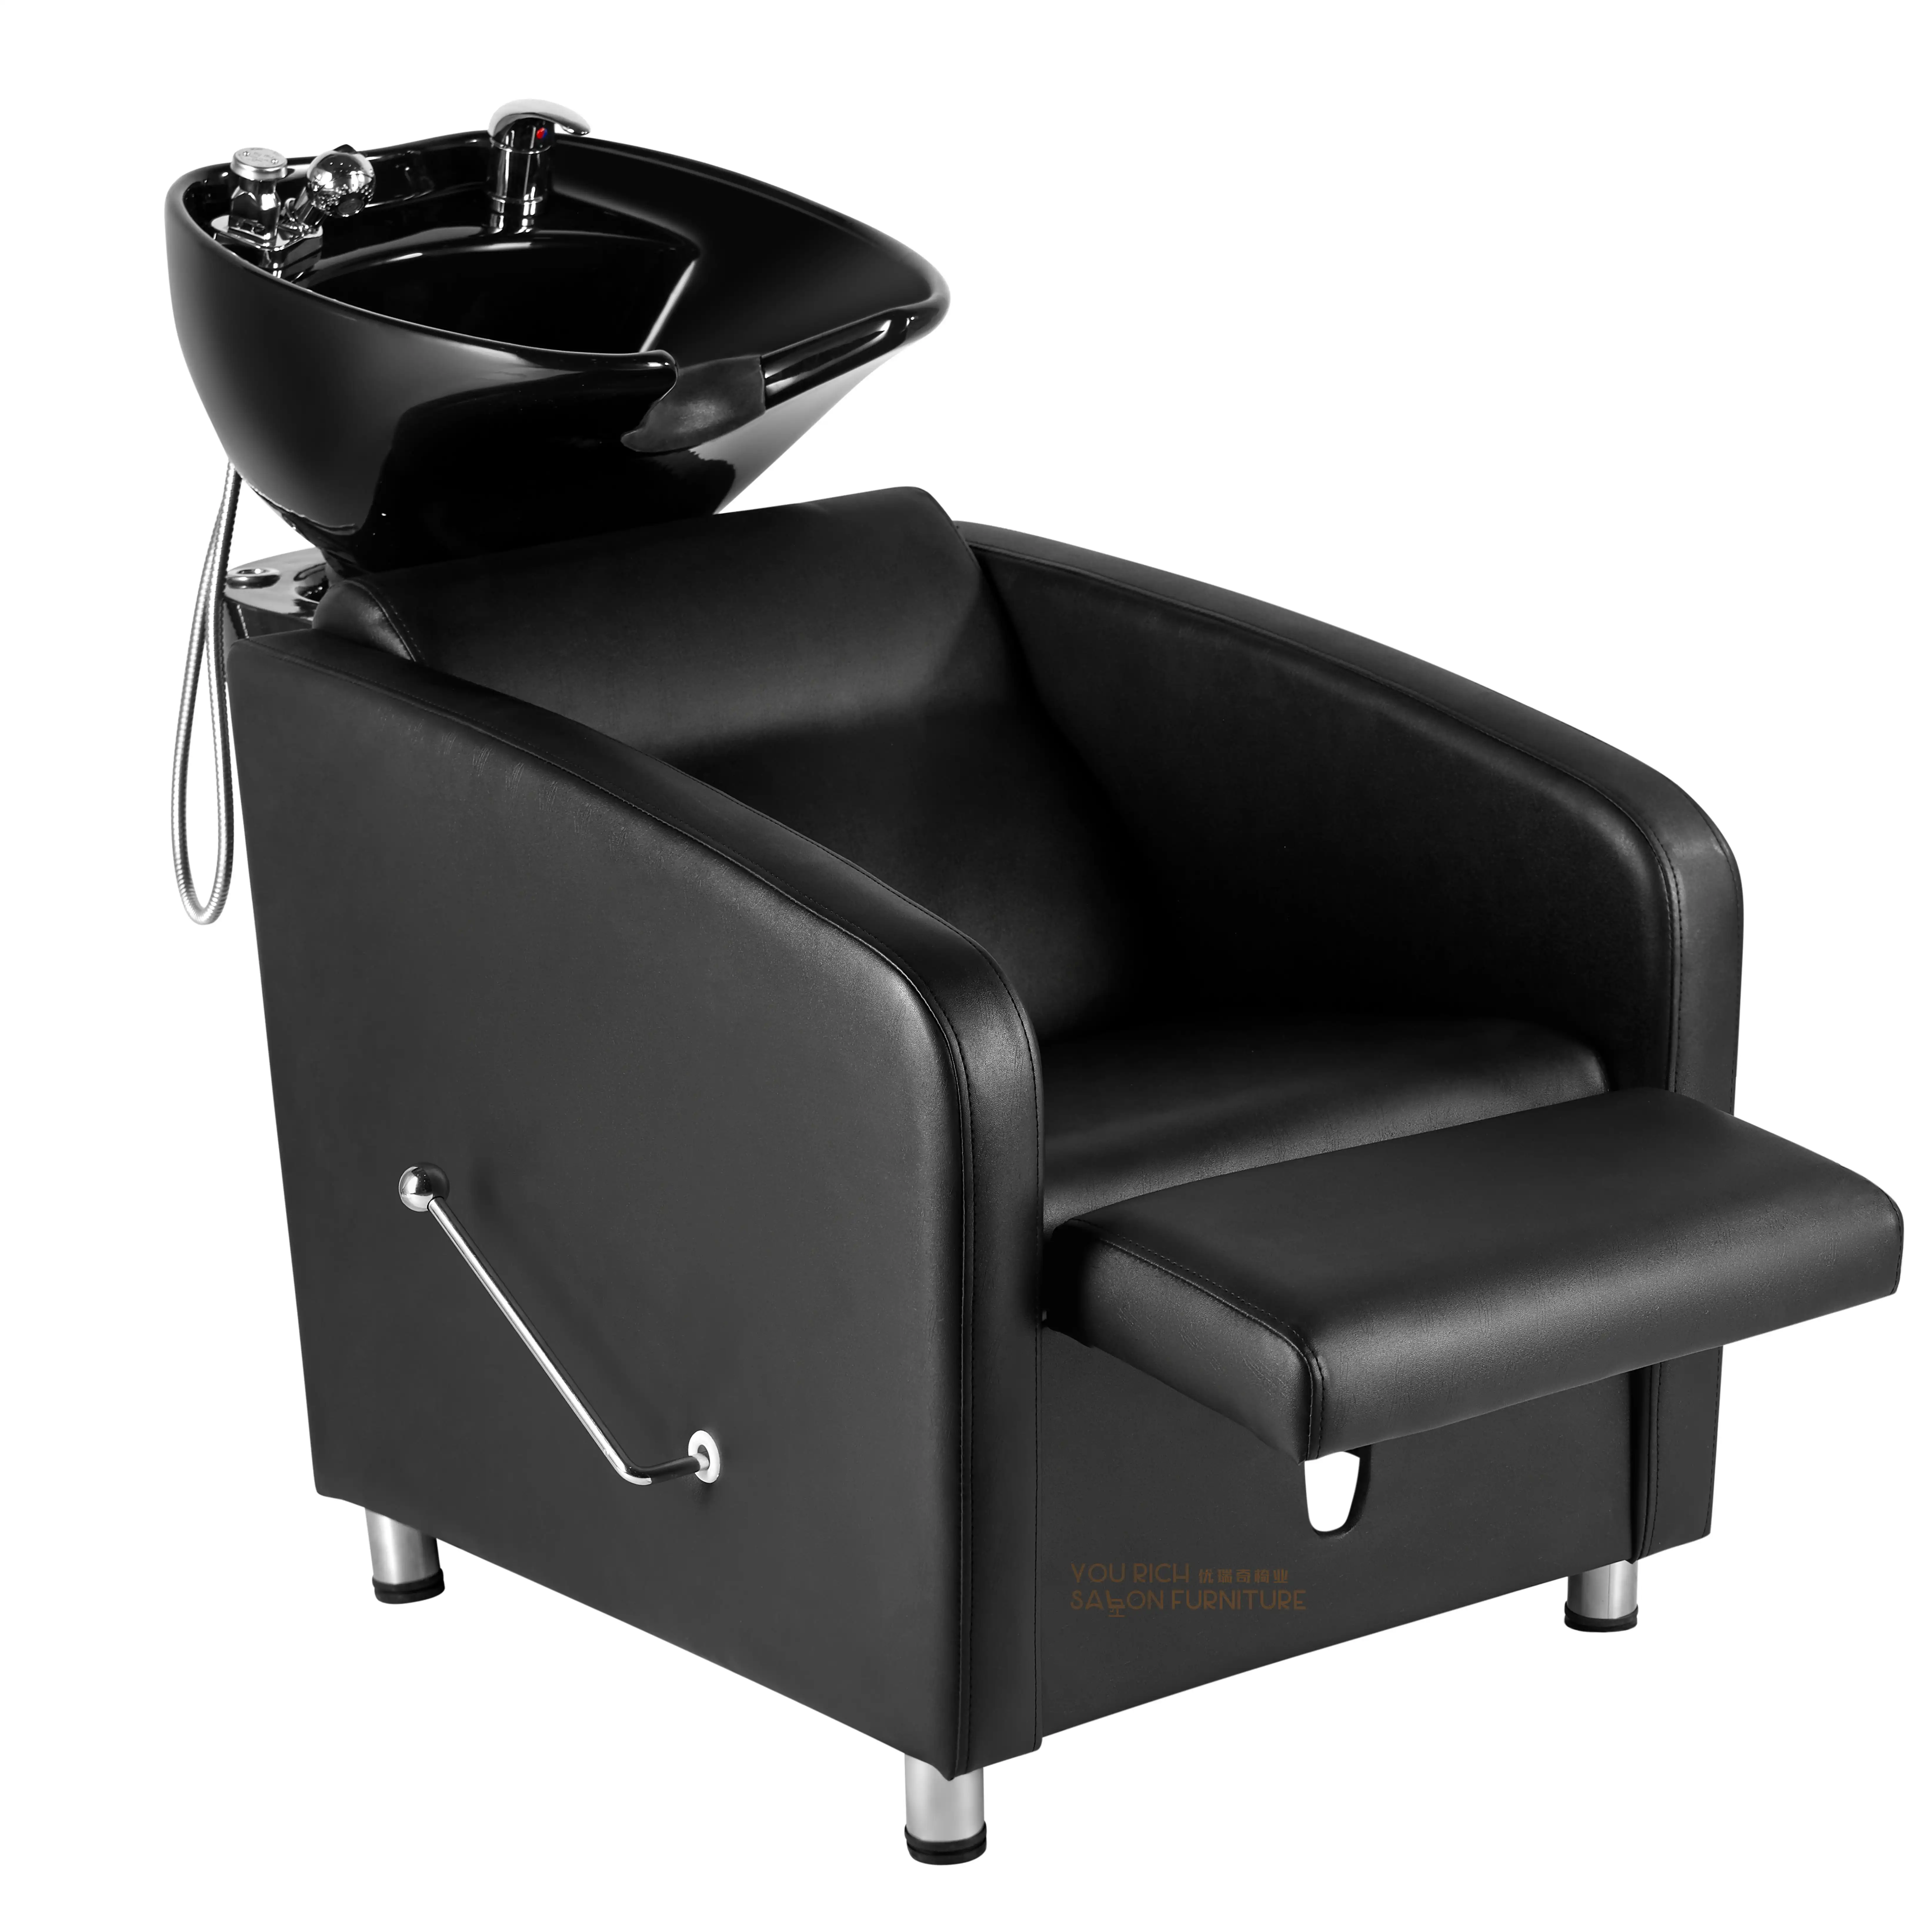 Cheap price shampoo chair with ceramic basin hair wash basin salon equipment styling salon beauty washing units wholesale